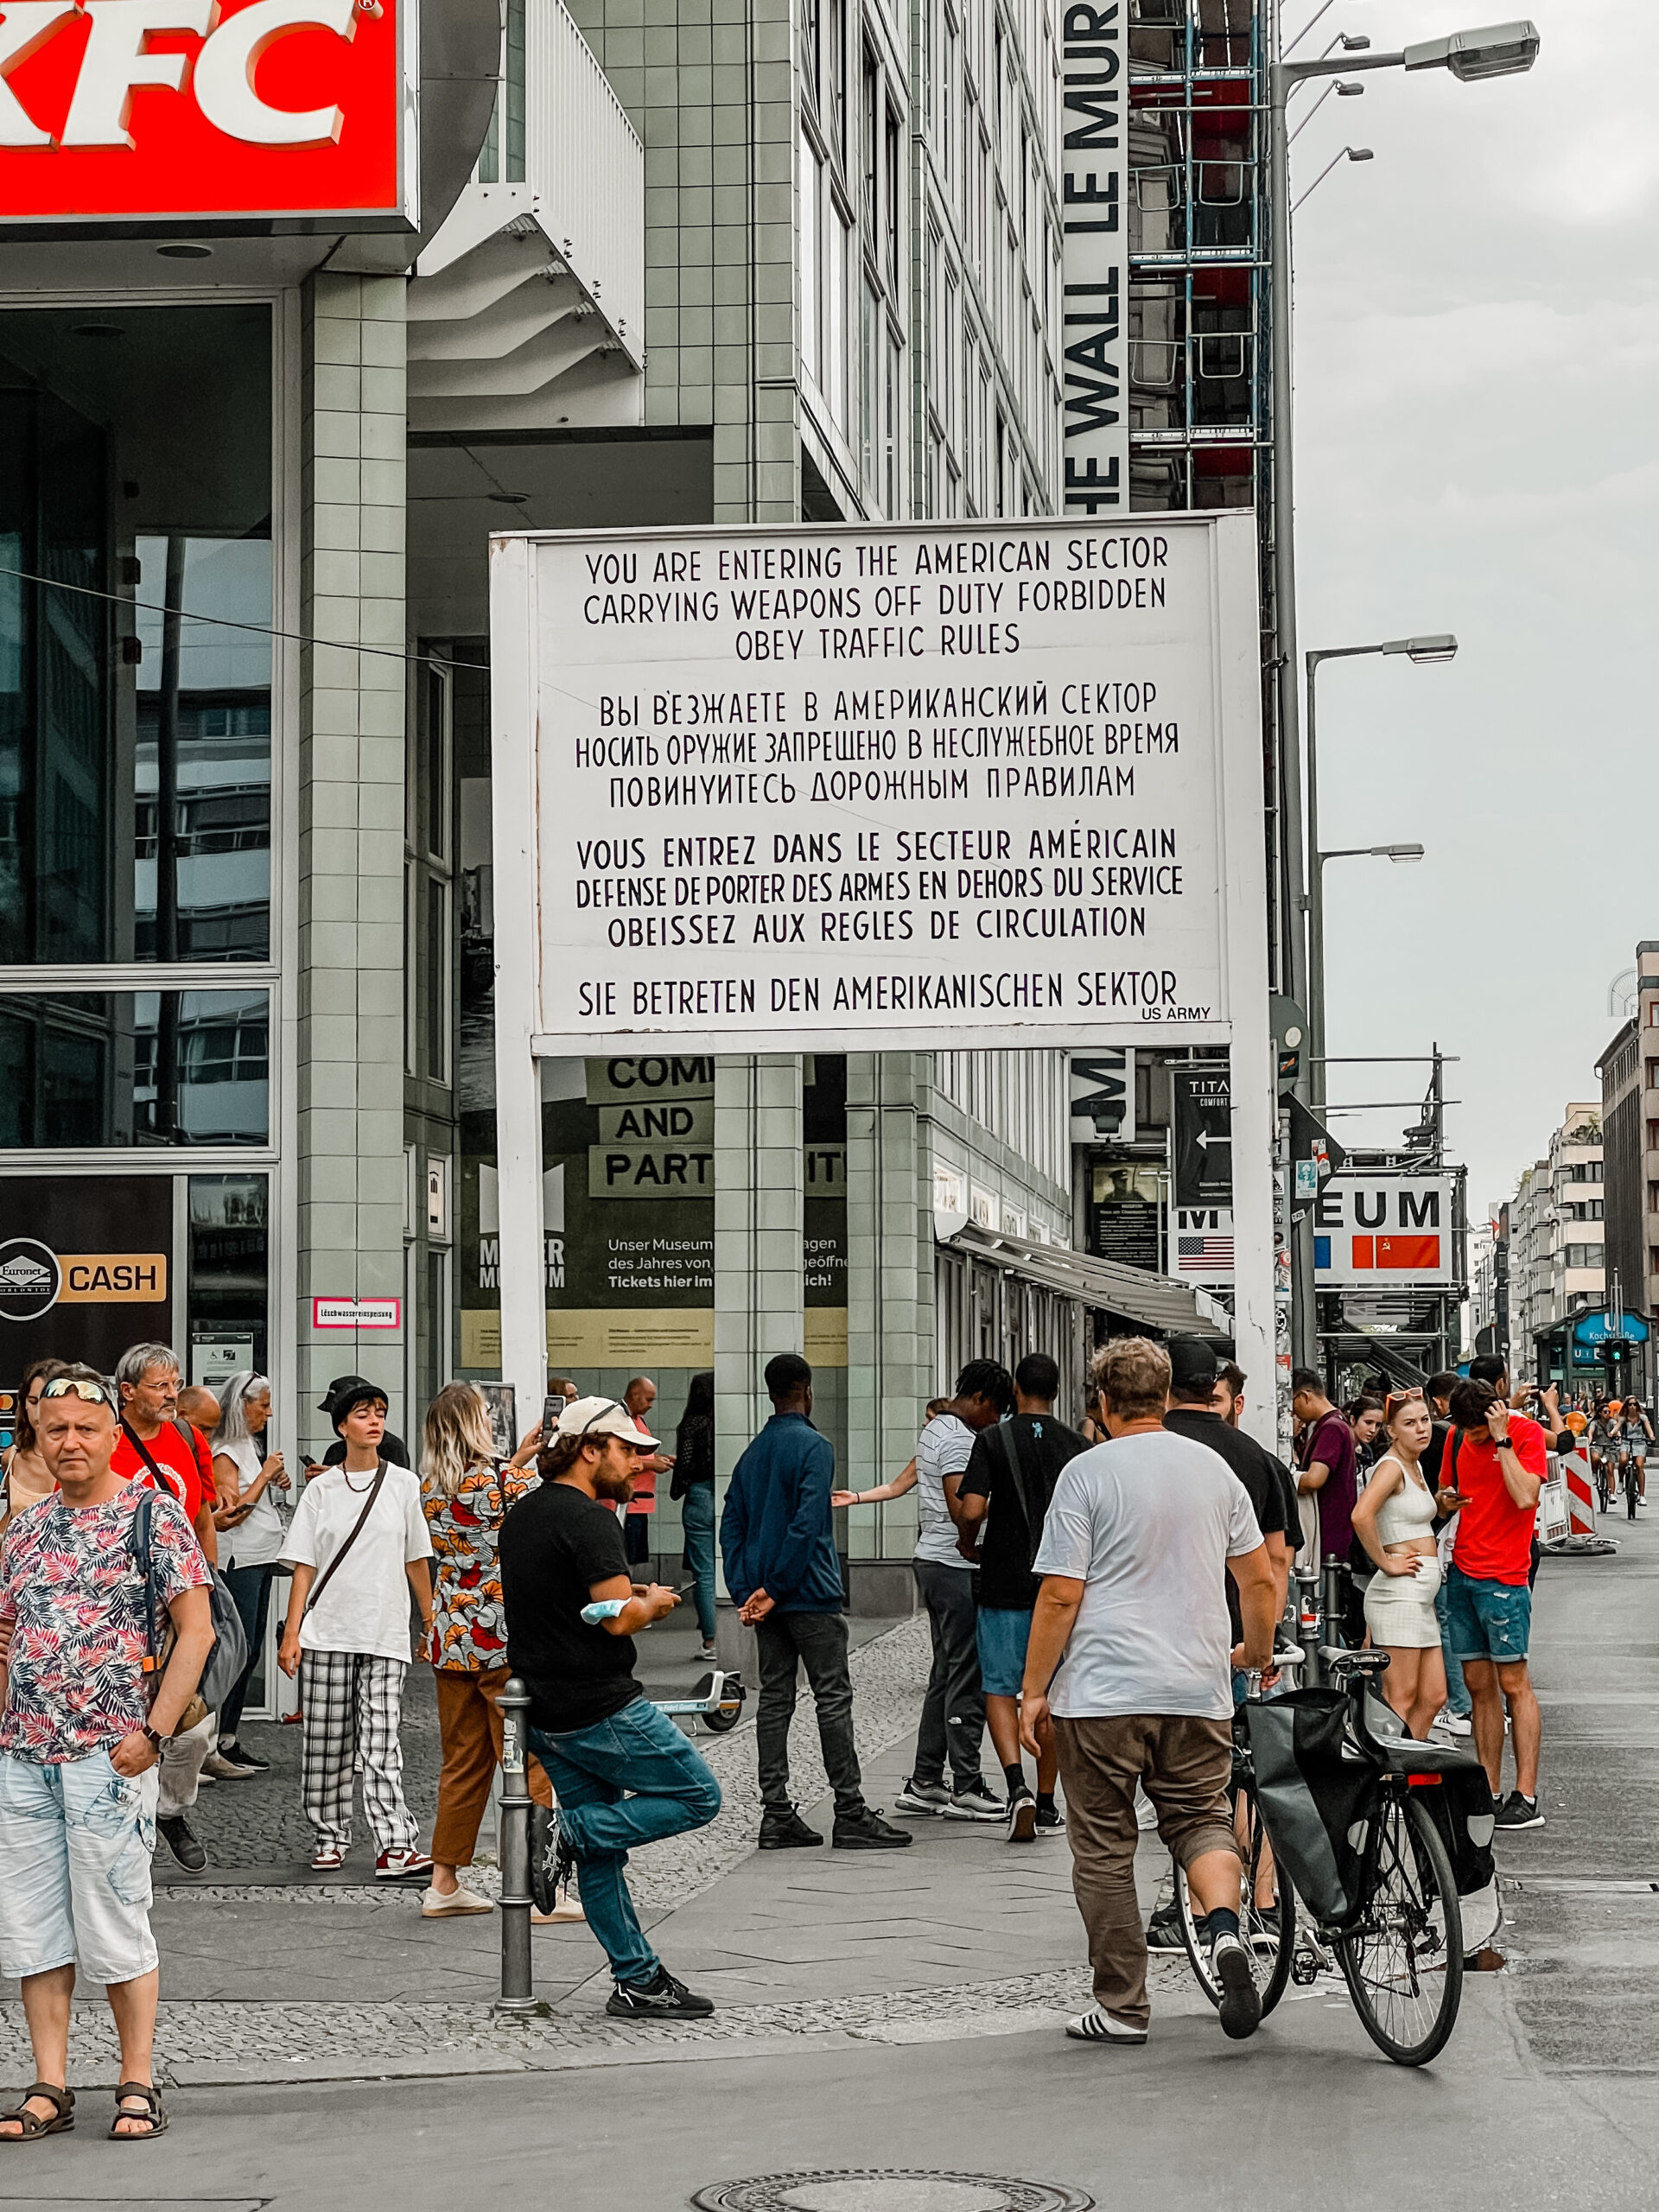 Checkpoint Charlie, Berlin